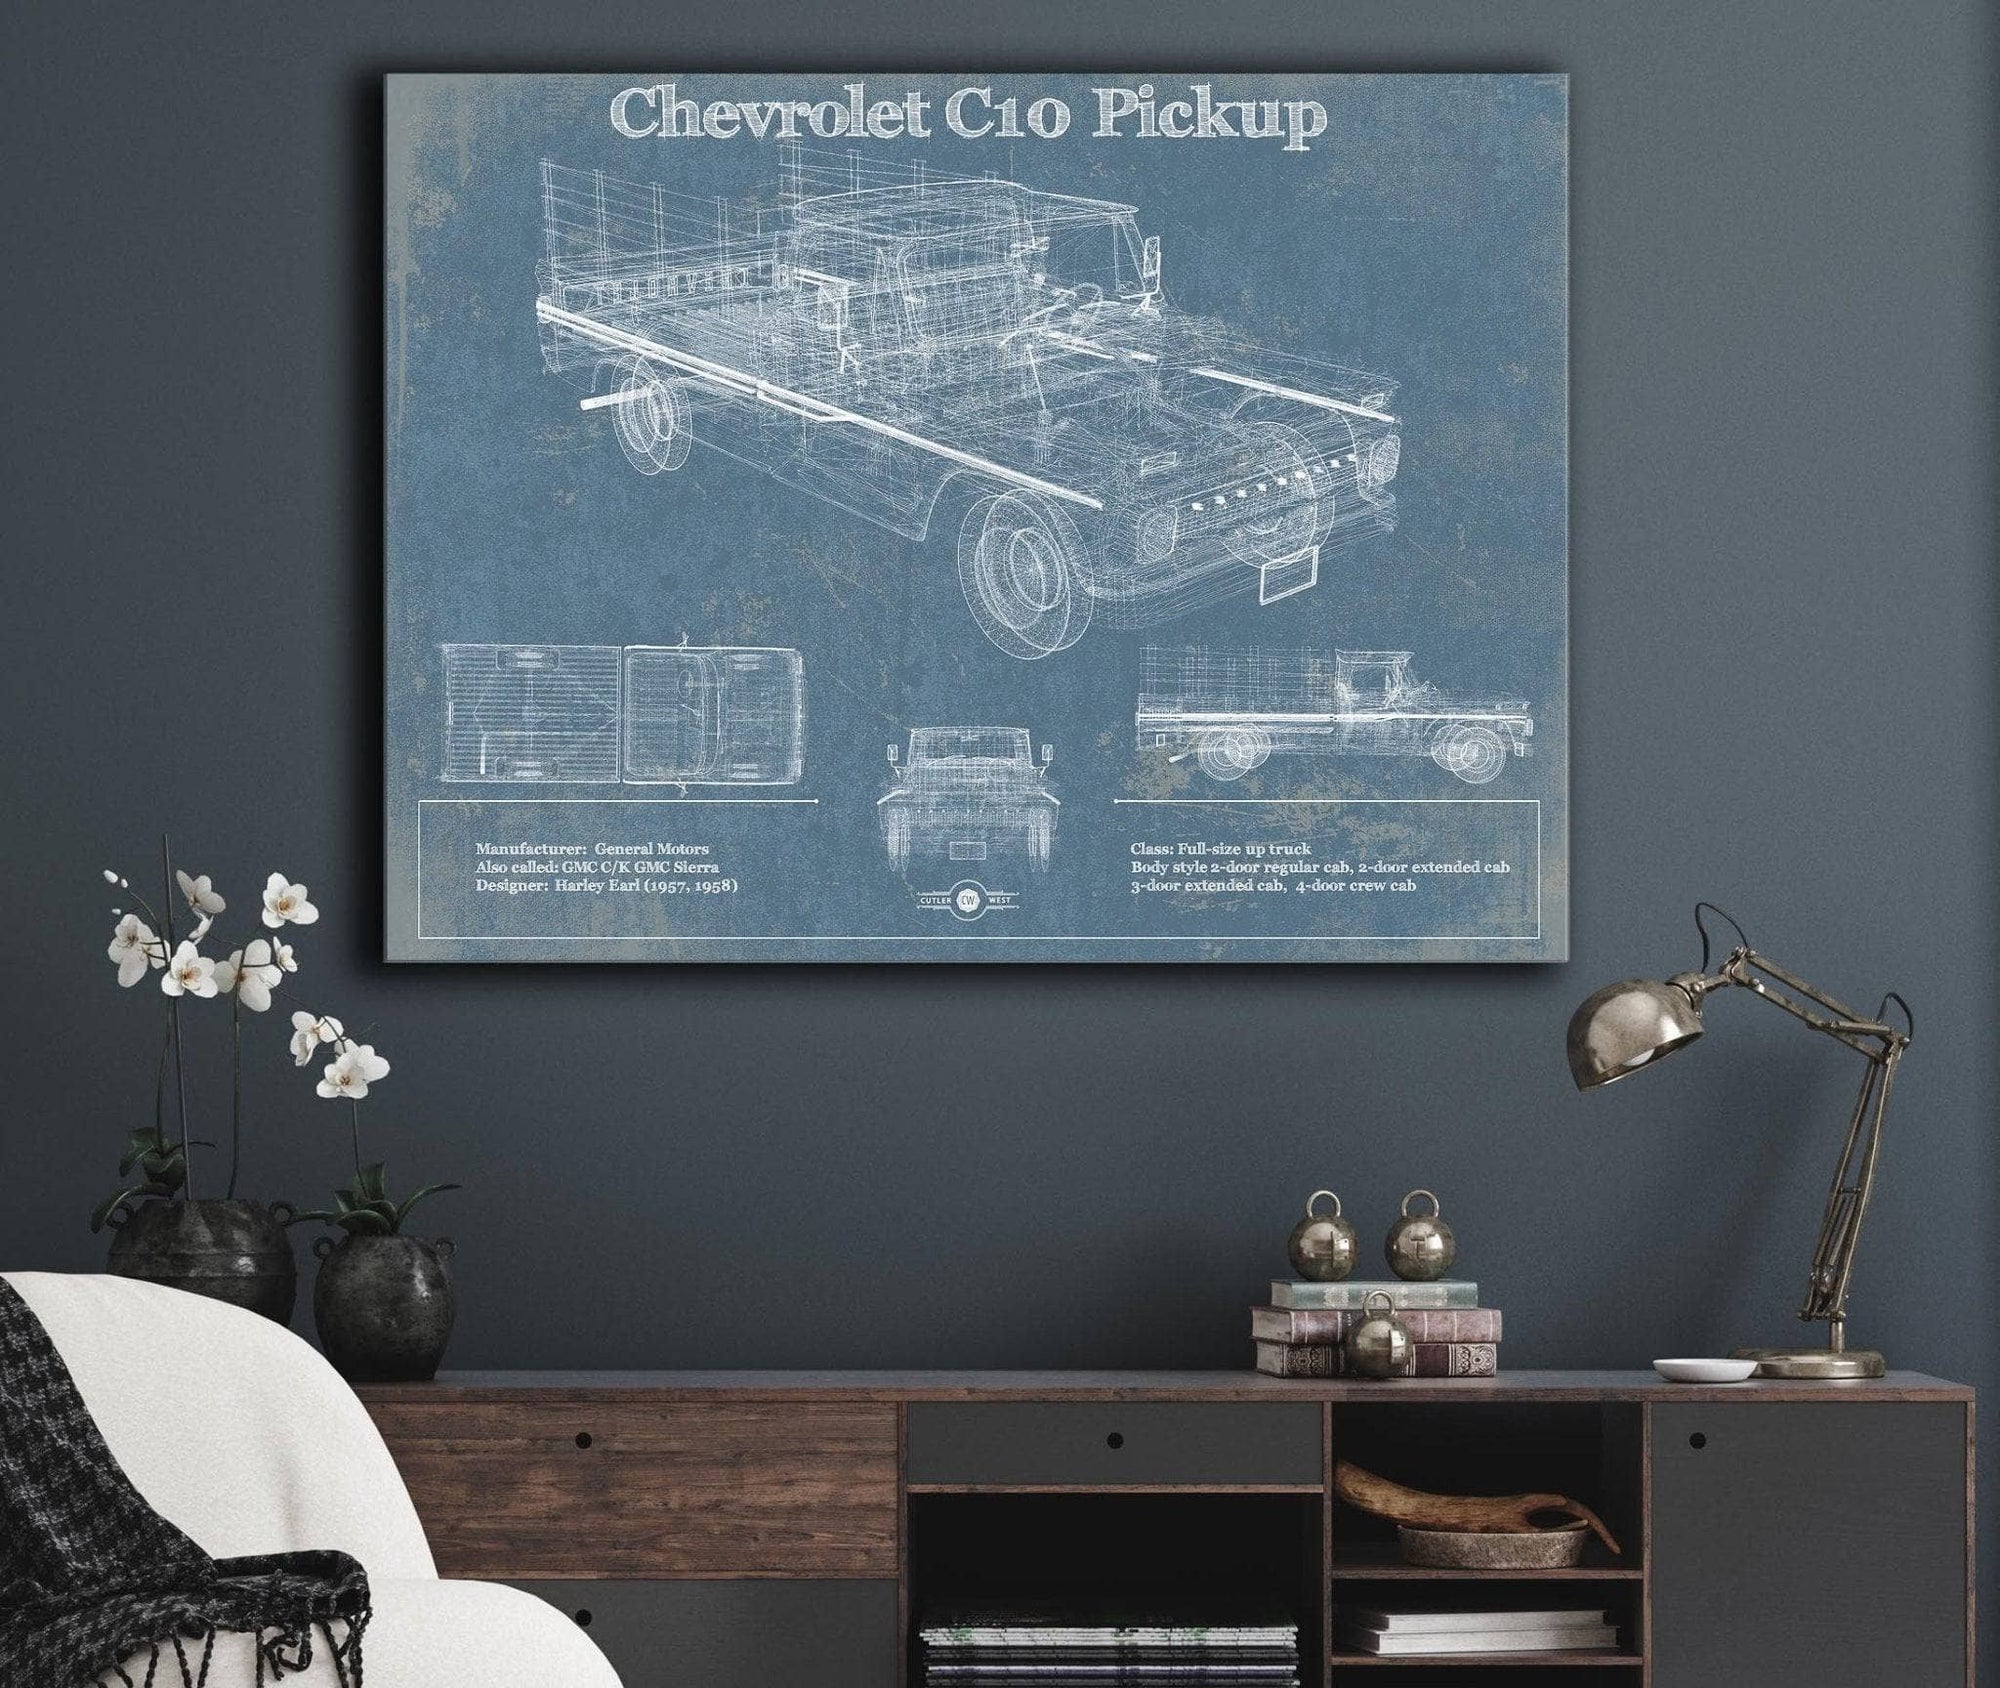 Cutler West Chevrolet Collection Chevy C10 Pickup Vintage Blueprint Auto Print